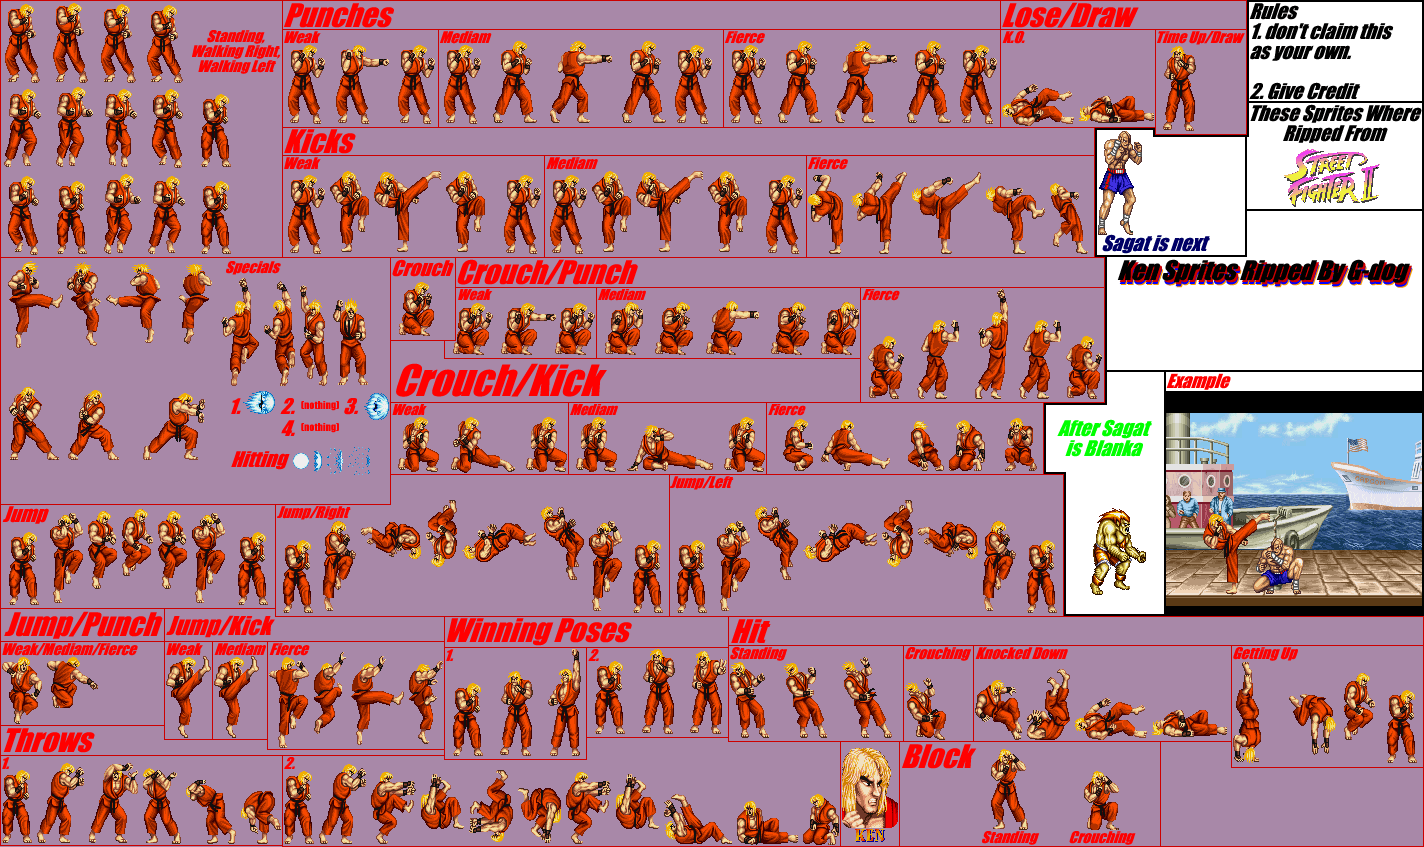 Street Fighter II: The World Warrior / Street Fighter II Turbo: Hyper Fighting - Ken